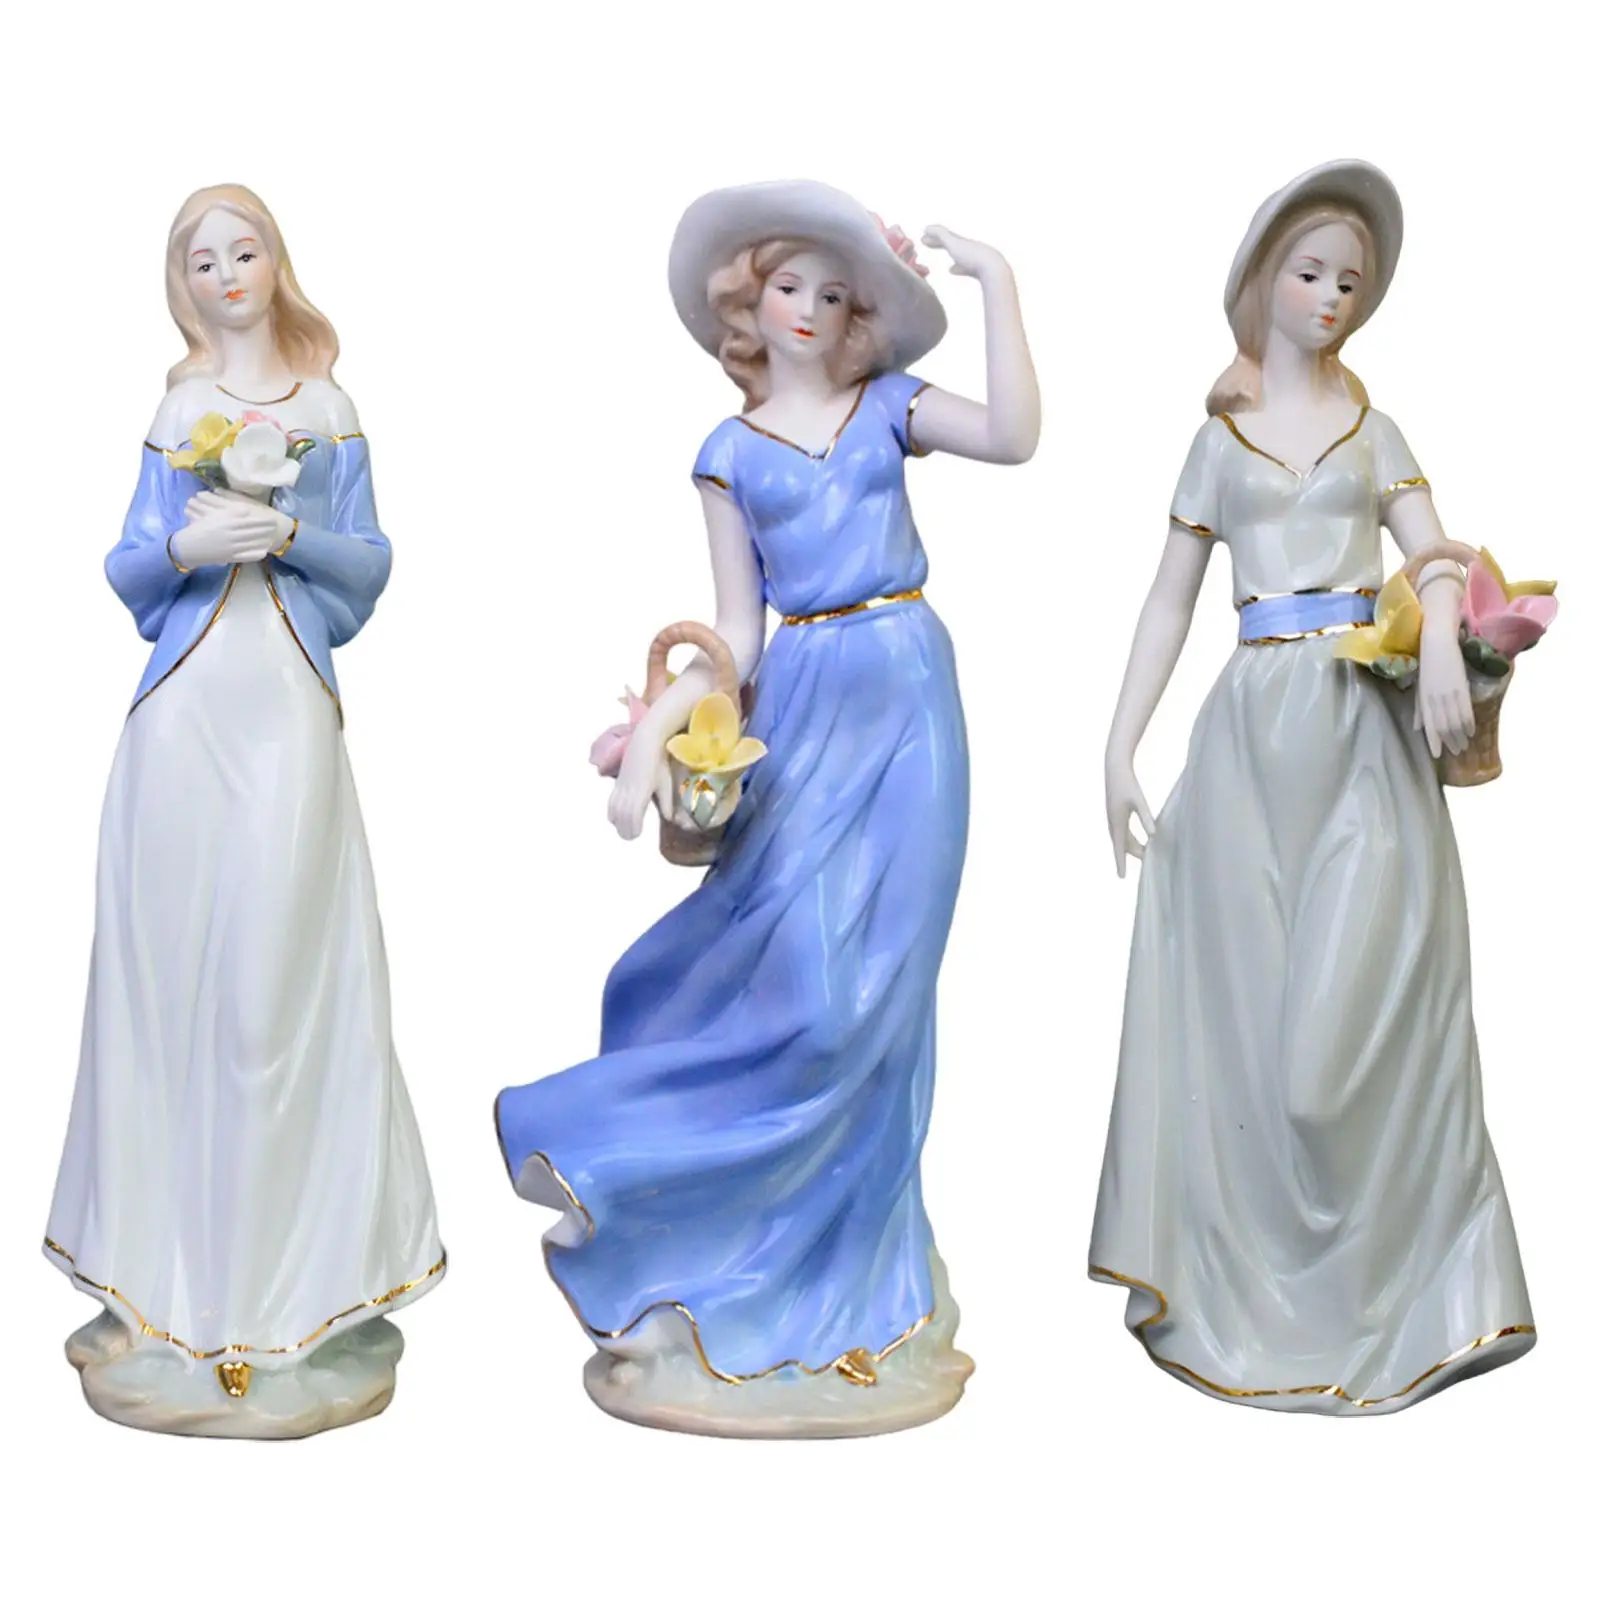 Girl Figurine Porcelain Figure Cute Modern Art Figurine Decorative Porcelain Figurine Home Decor for Office Tabletop Bookcase